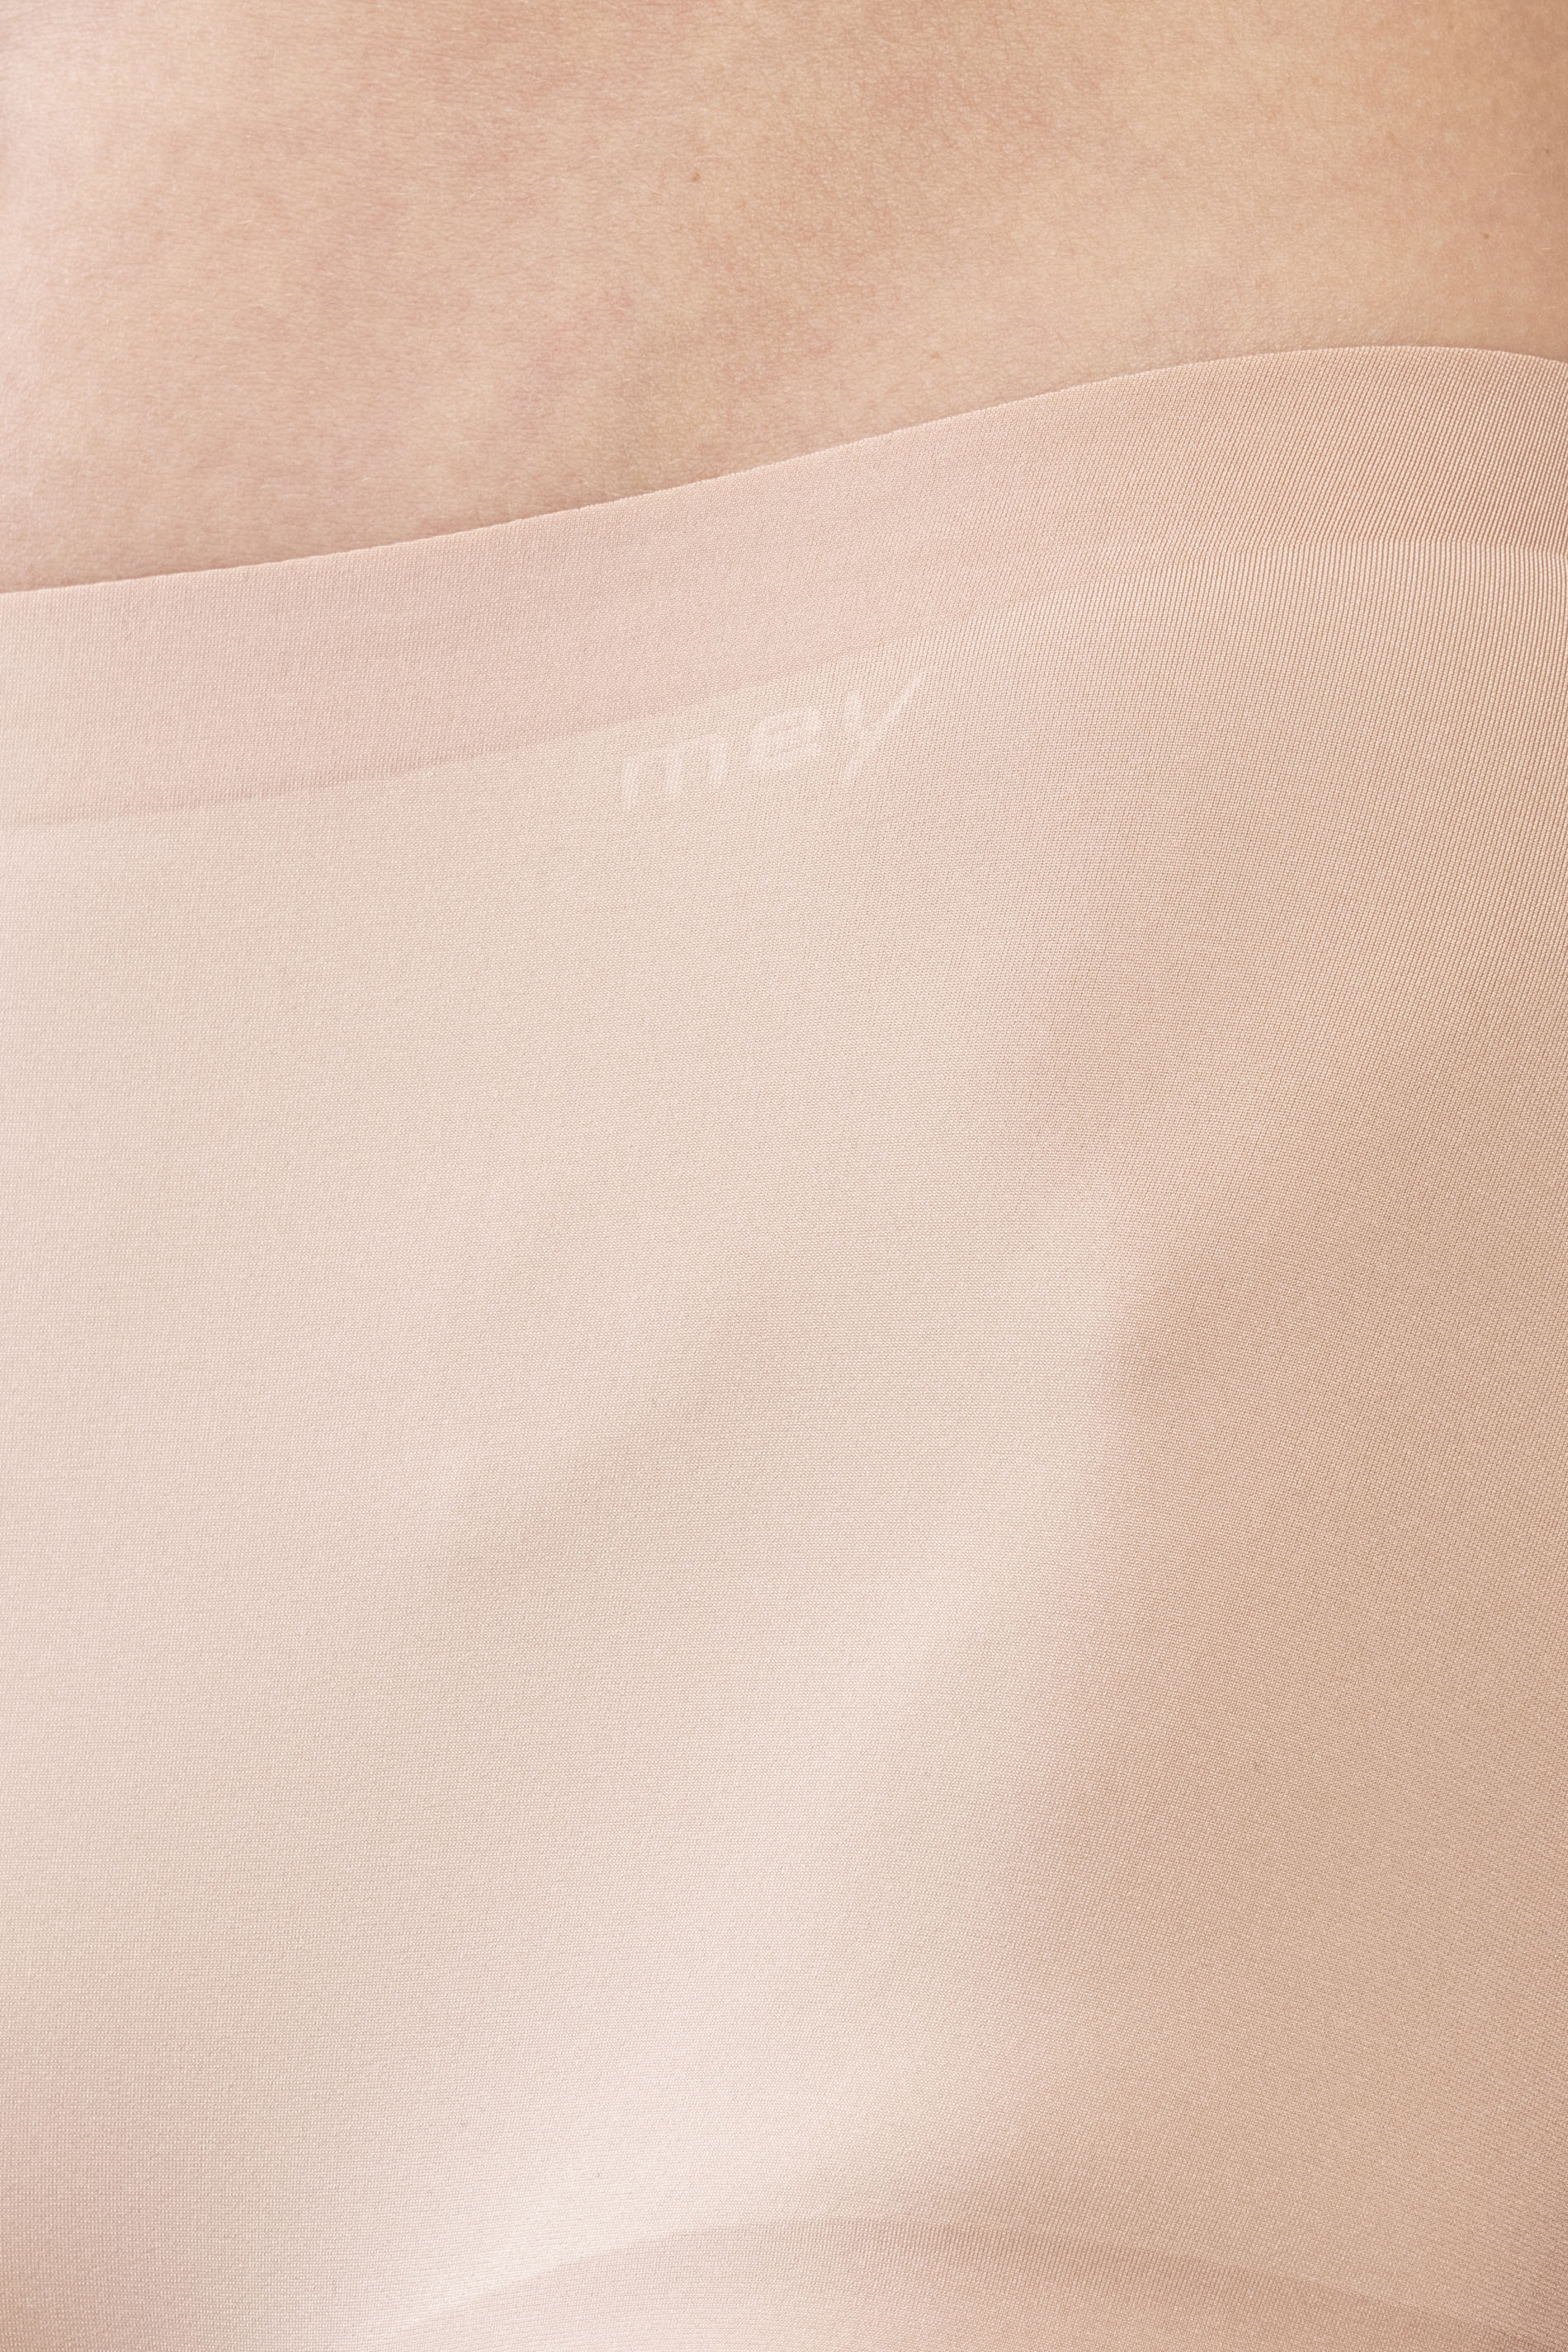 Panty Cream Tan Serie Illusion Detail View 01 | mey®